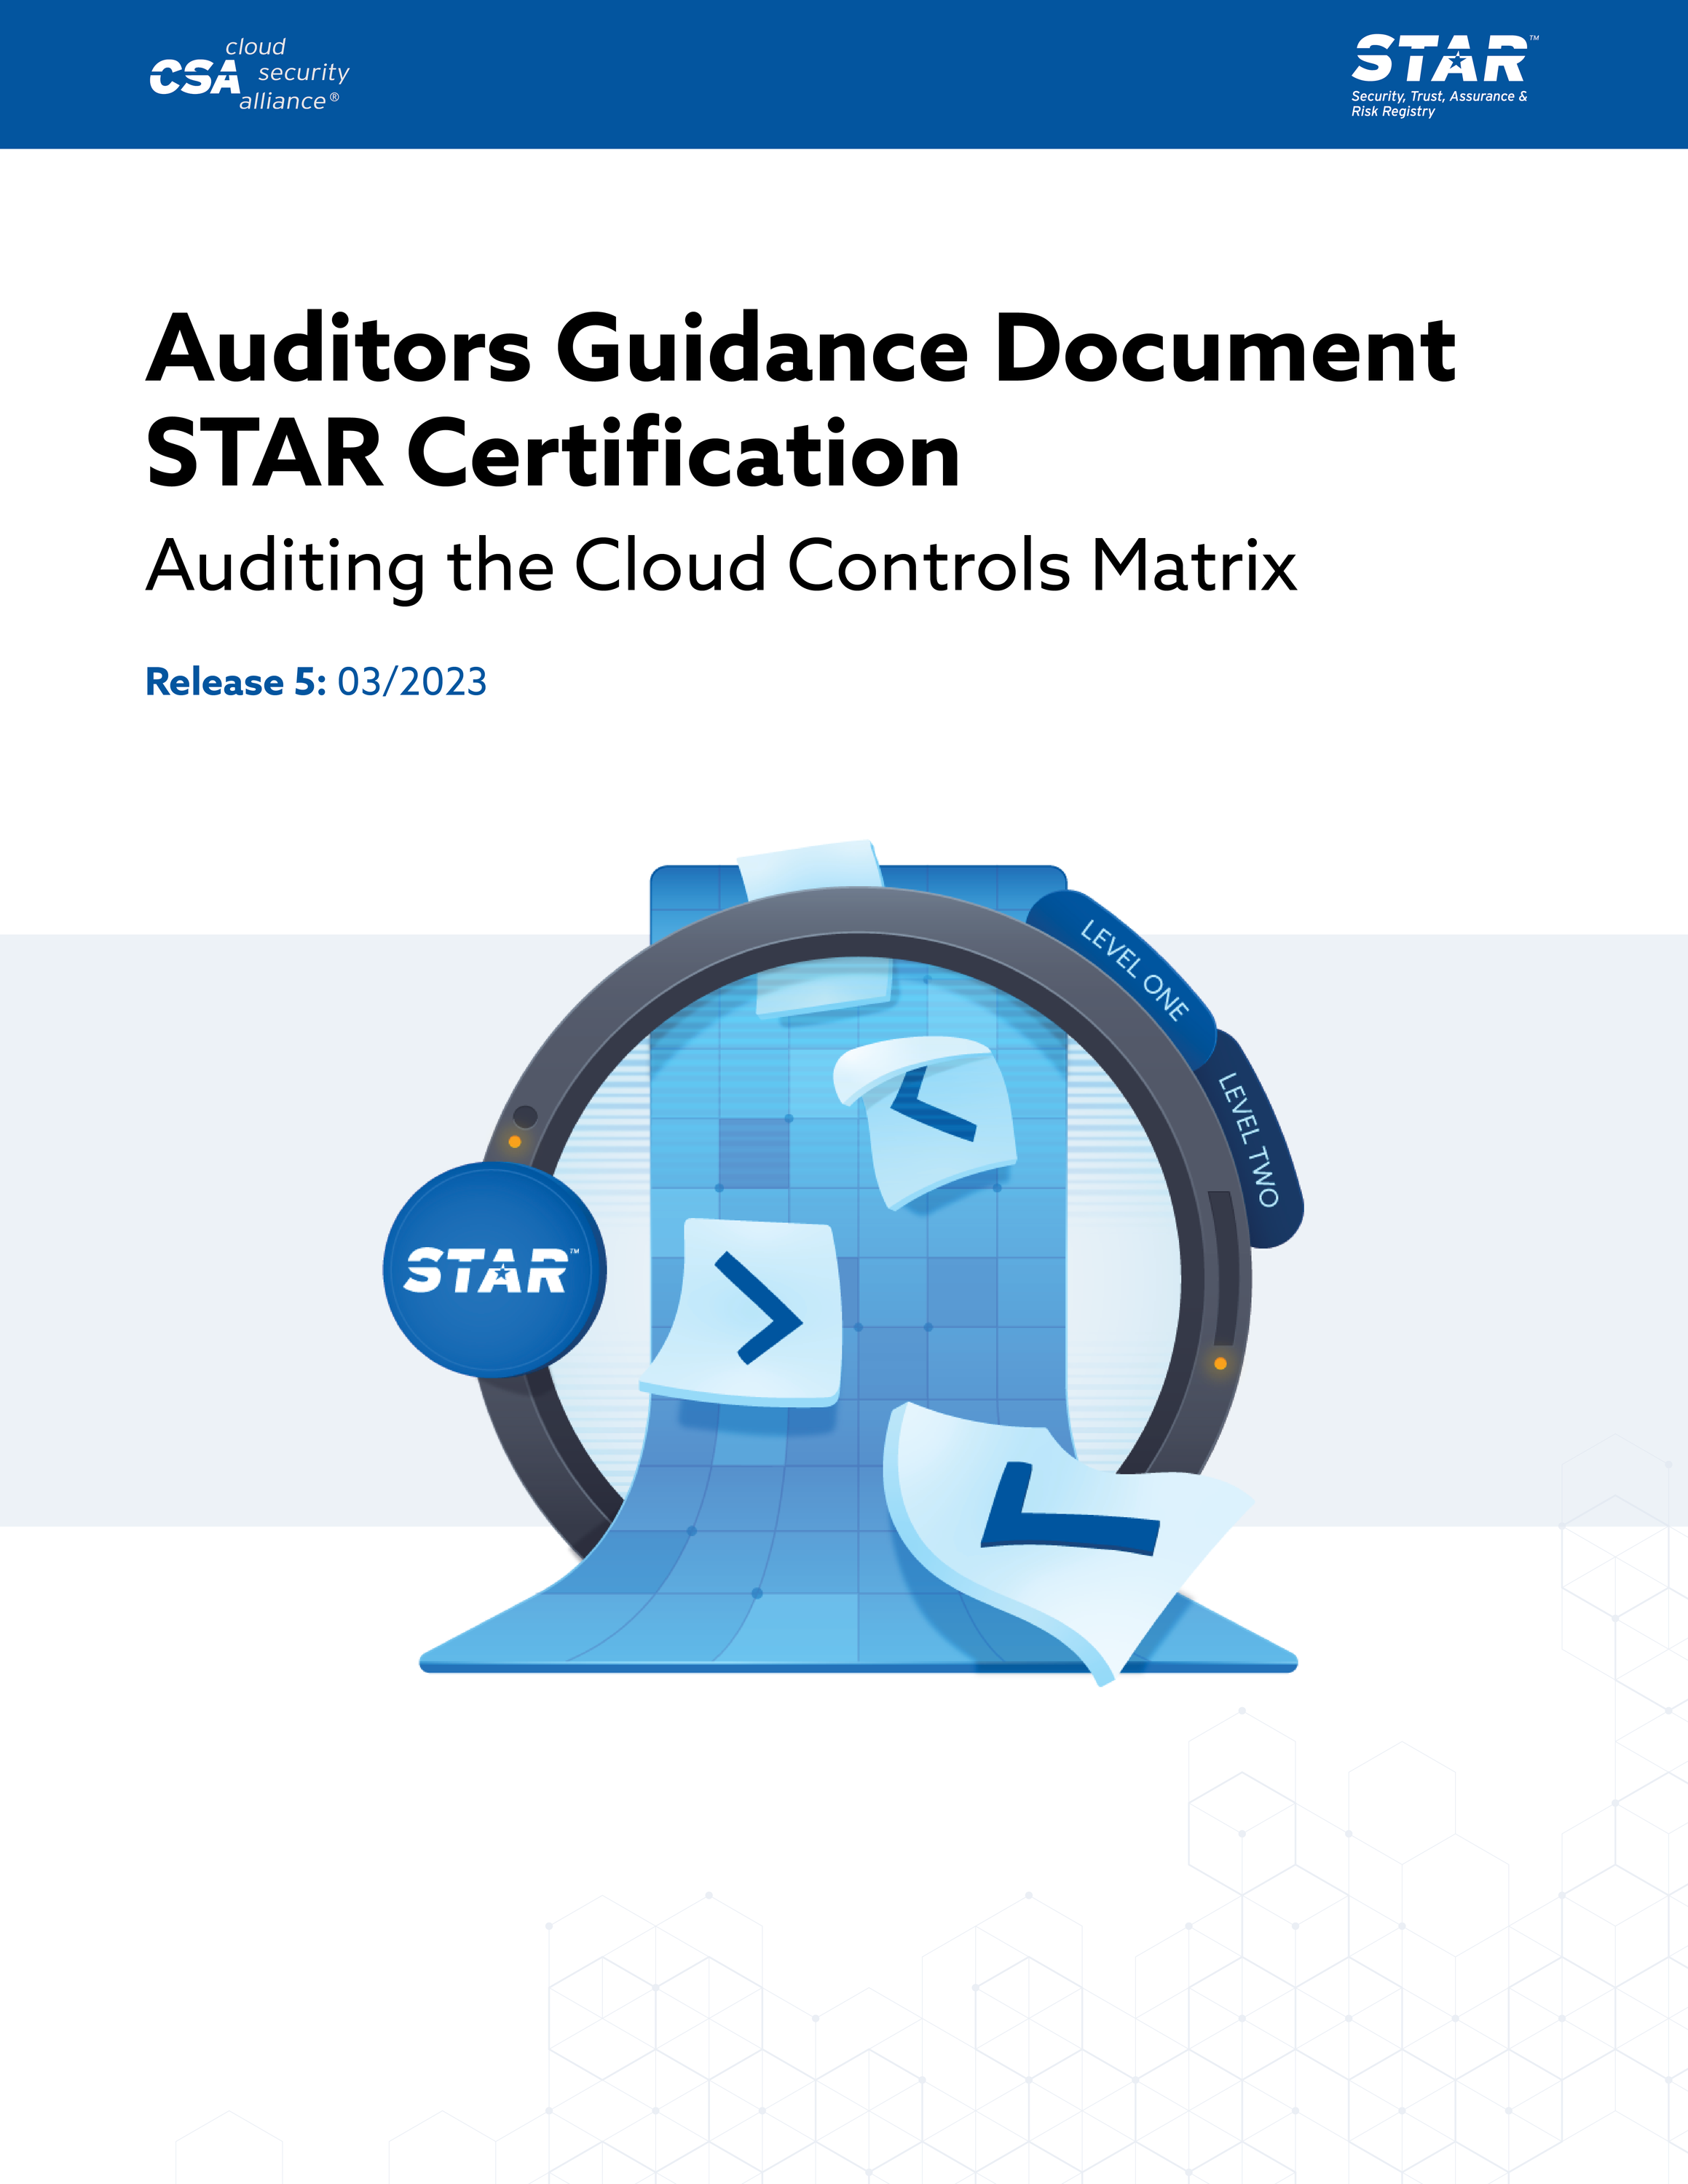 Auditors Guidance Document STAR Certification: Auditing the Cloud Controls Matrix